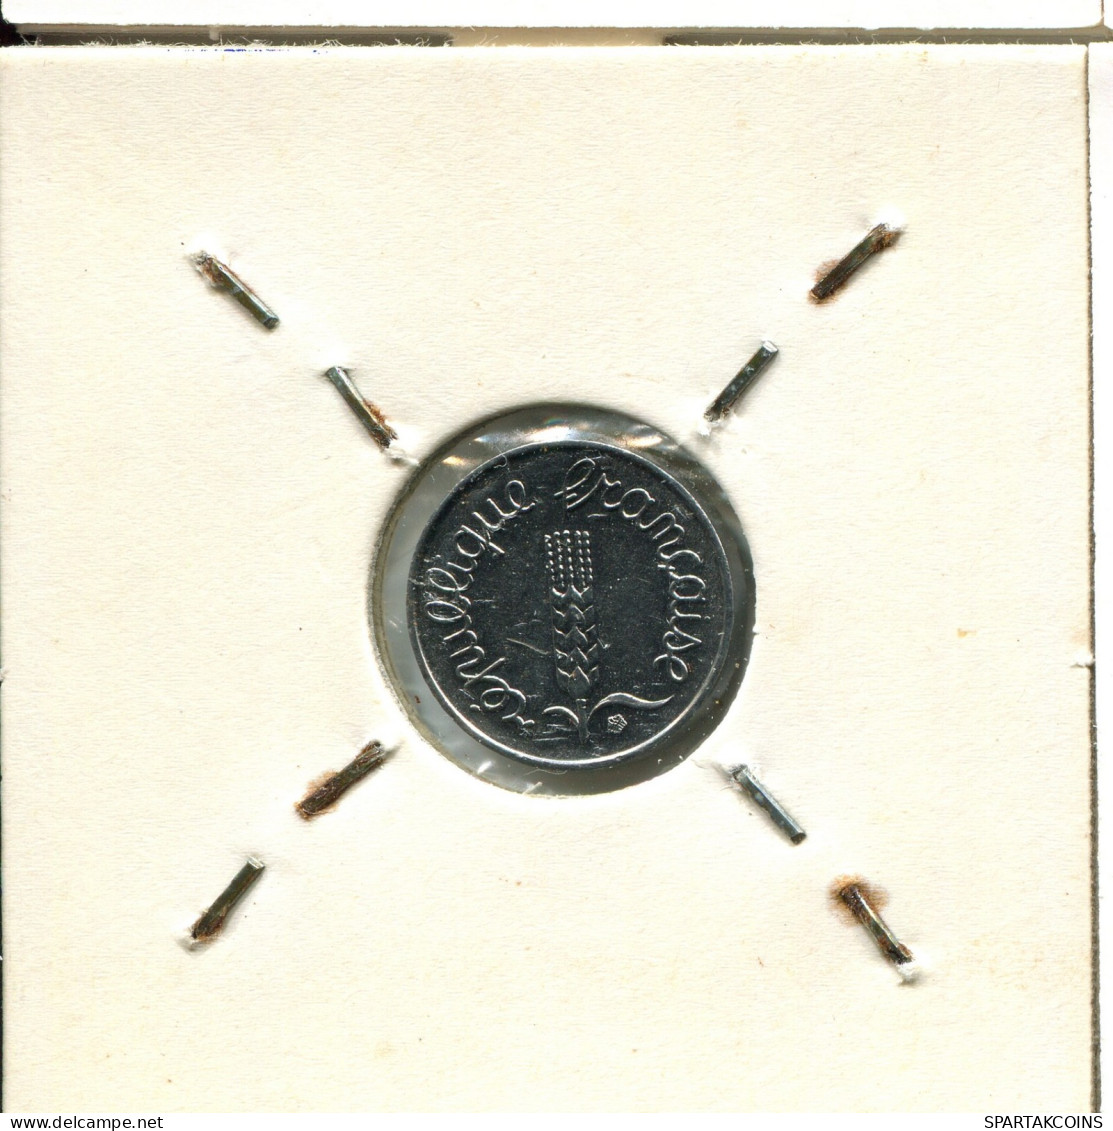 1 CENTIME 1963 FRANKREICH FRANCE Französisch Münze #AW336.D.A - 1 Centime